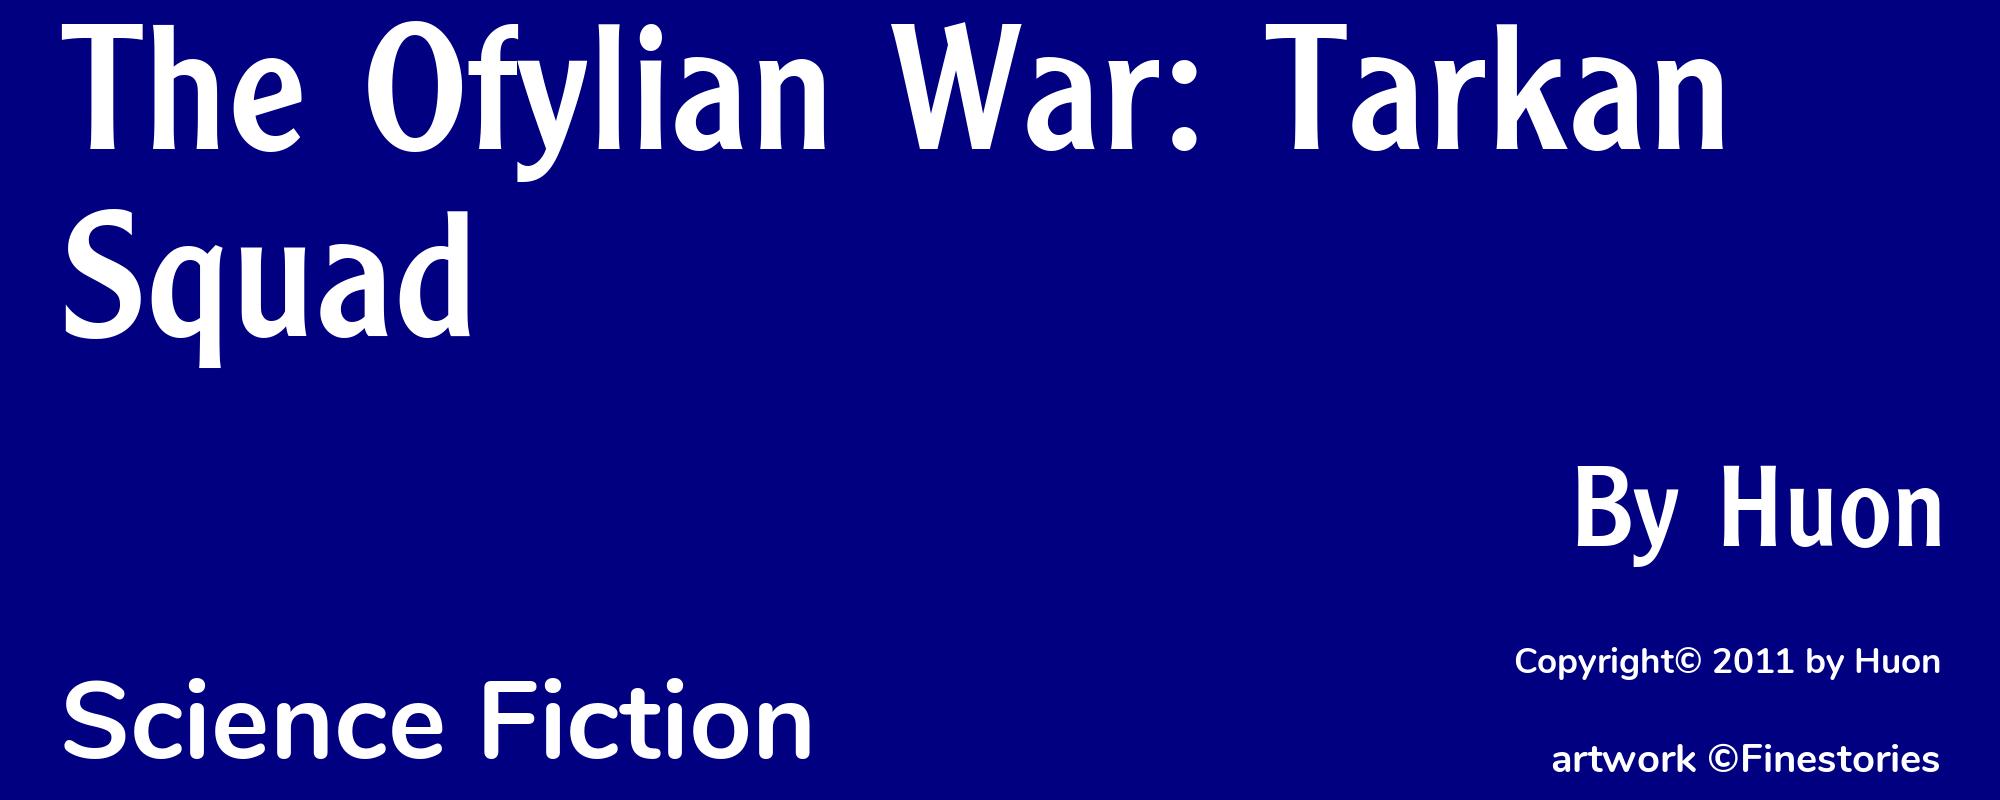 The Ofylian War: Tarkan Squad - Cover